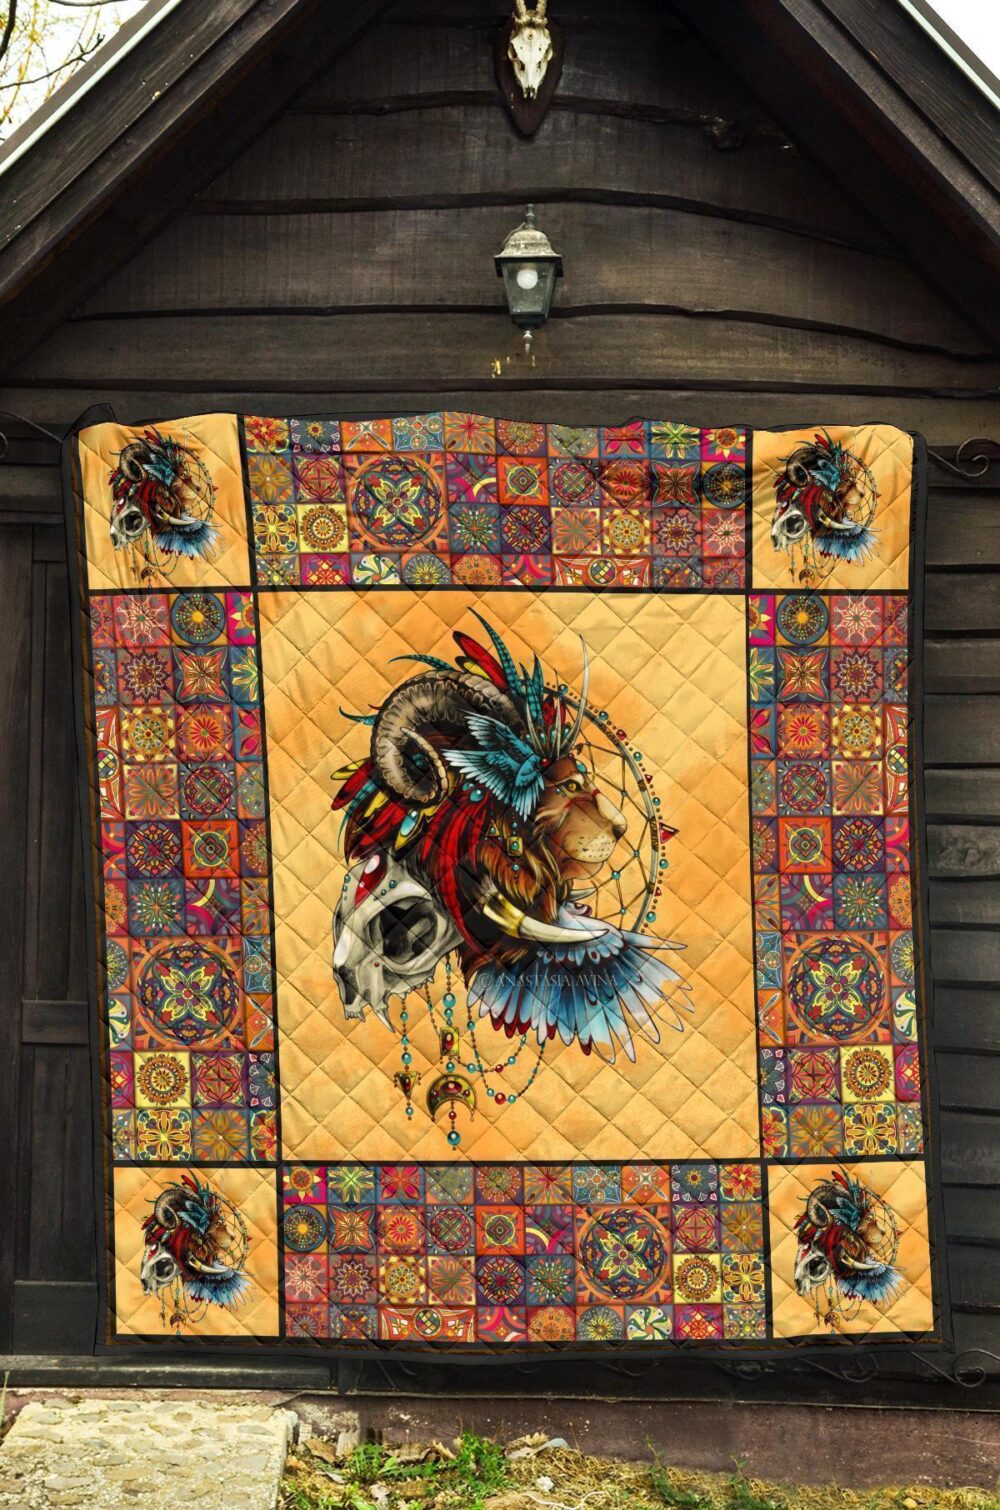 Native Lion Quilt Blanket Amazing Gift Idea